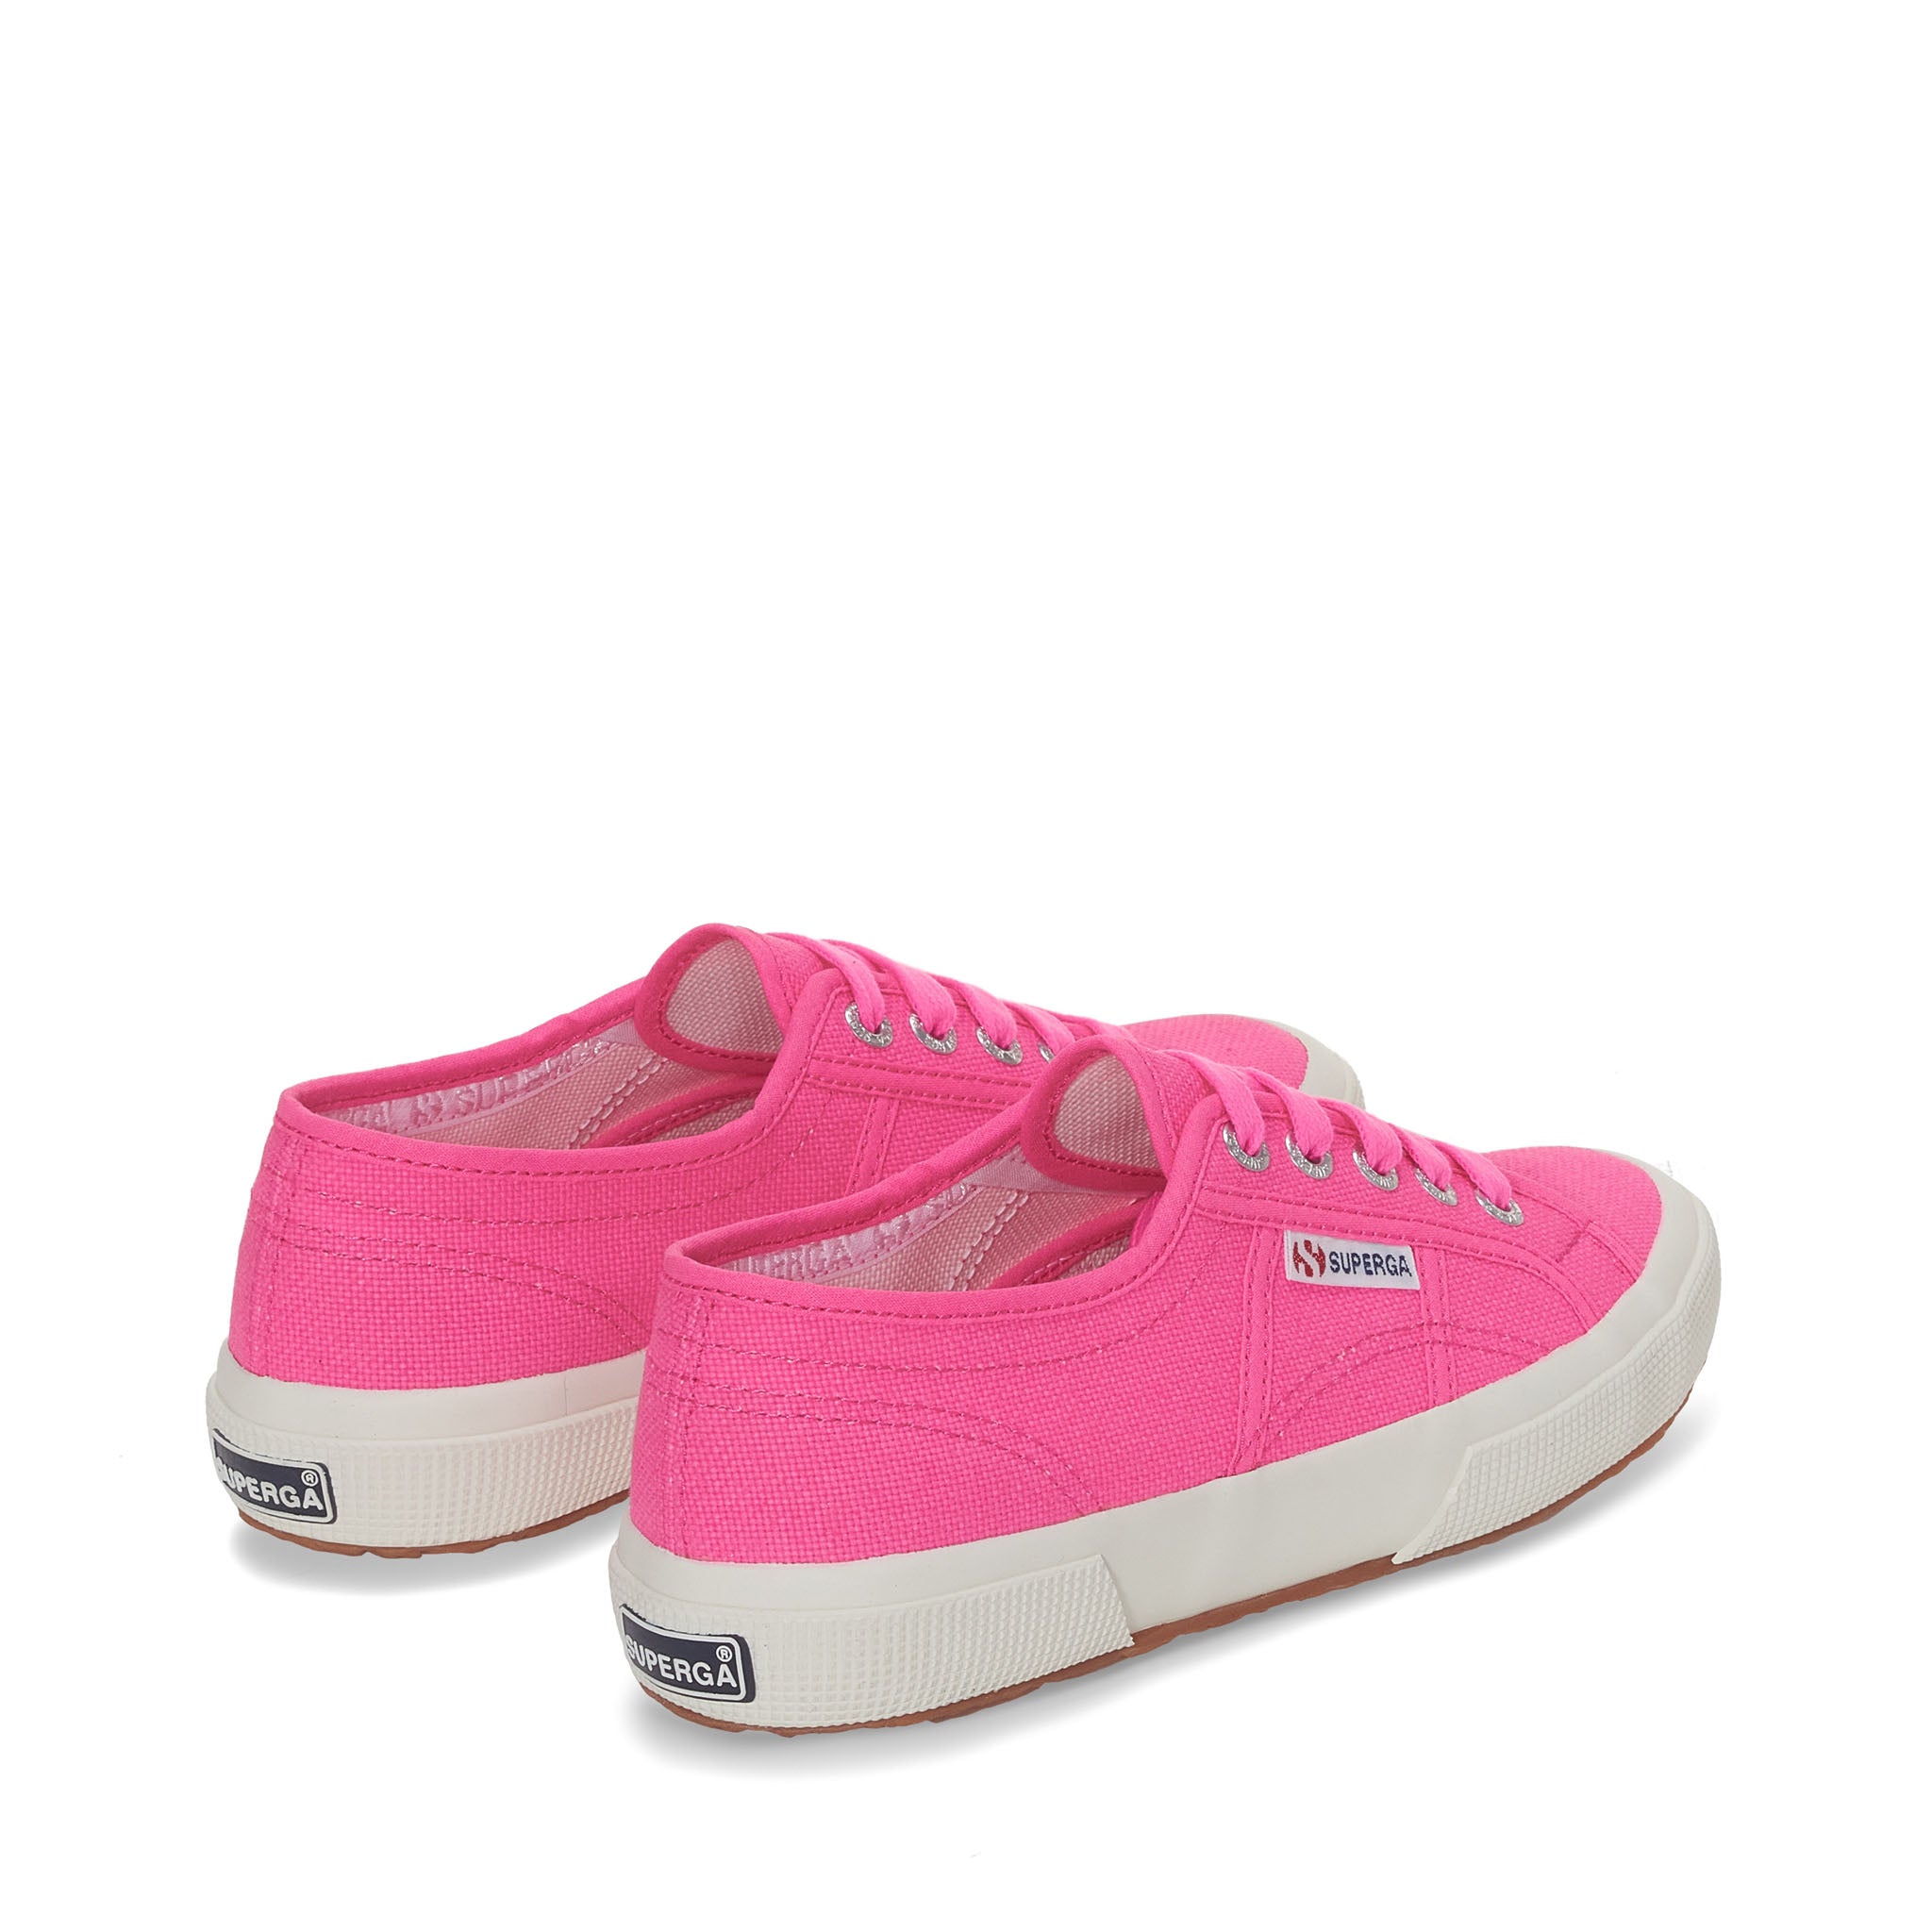 Superga 2750 Cotu Classic Sneakers - Neon Pink Avorio. Back view